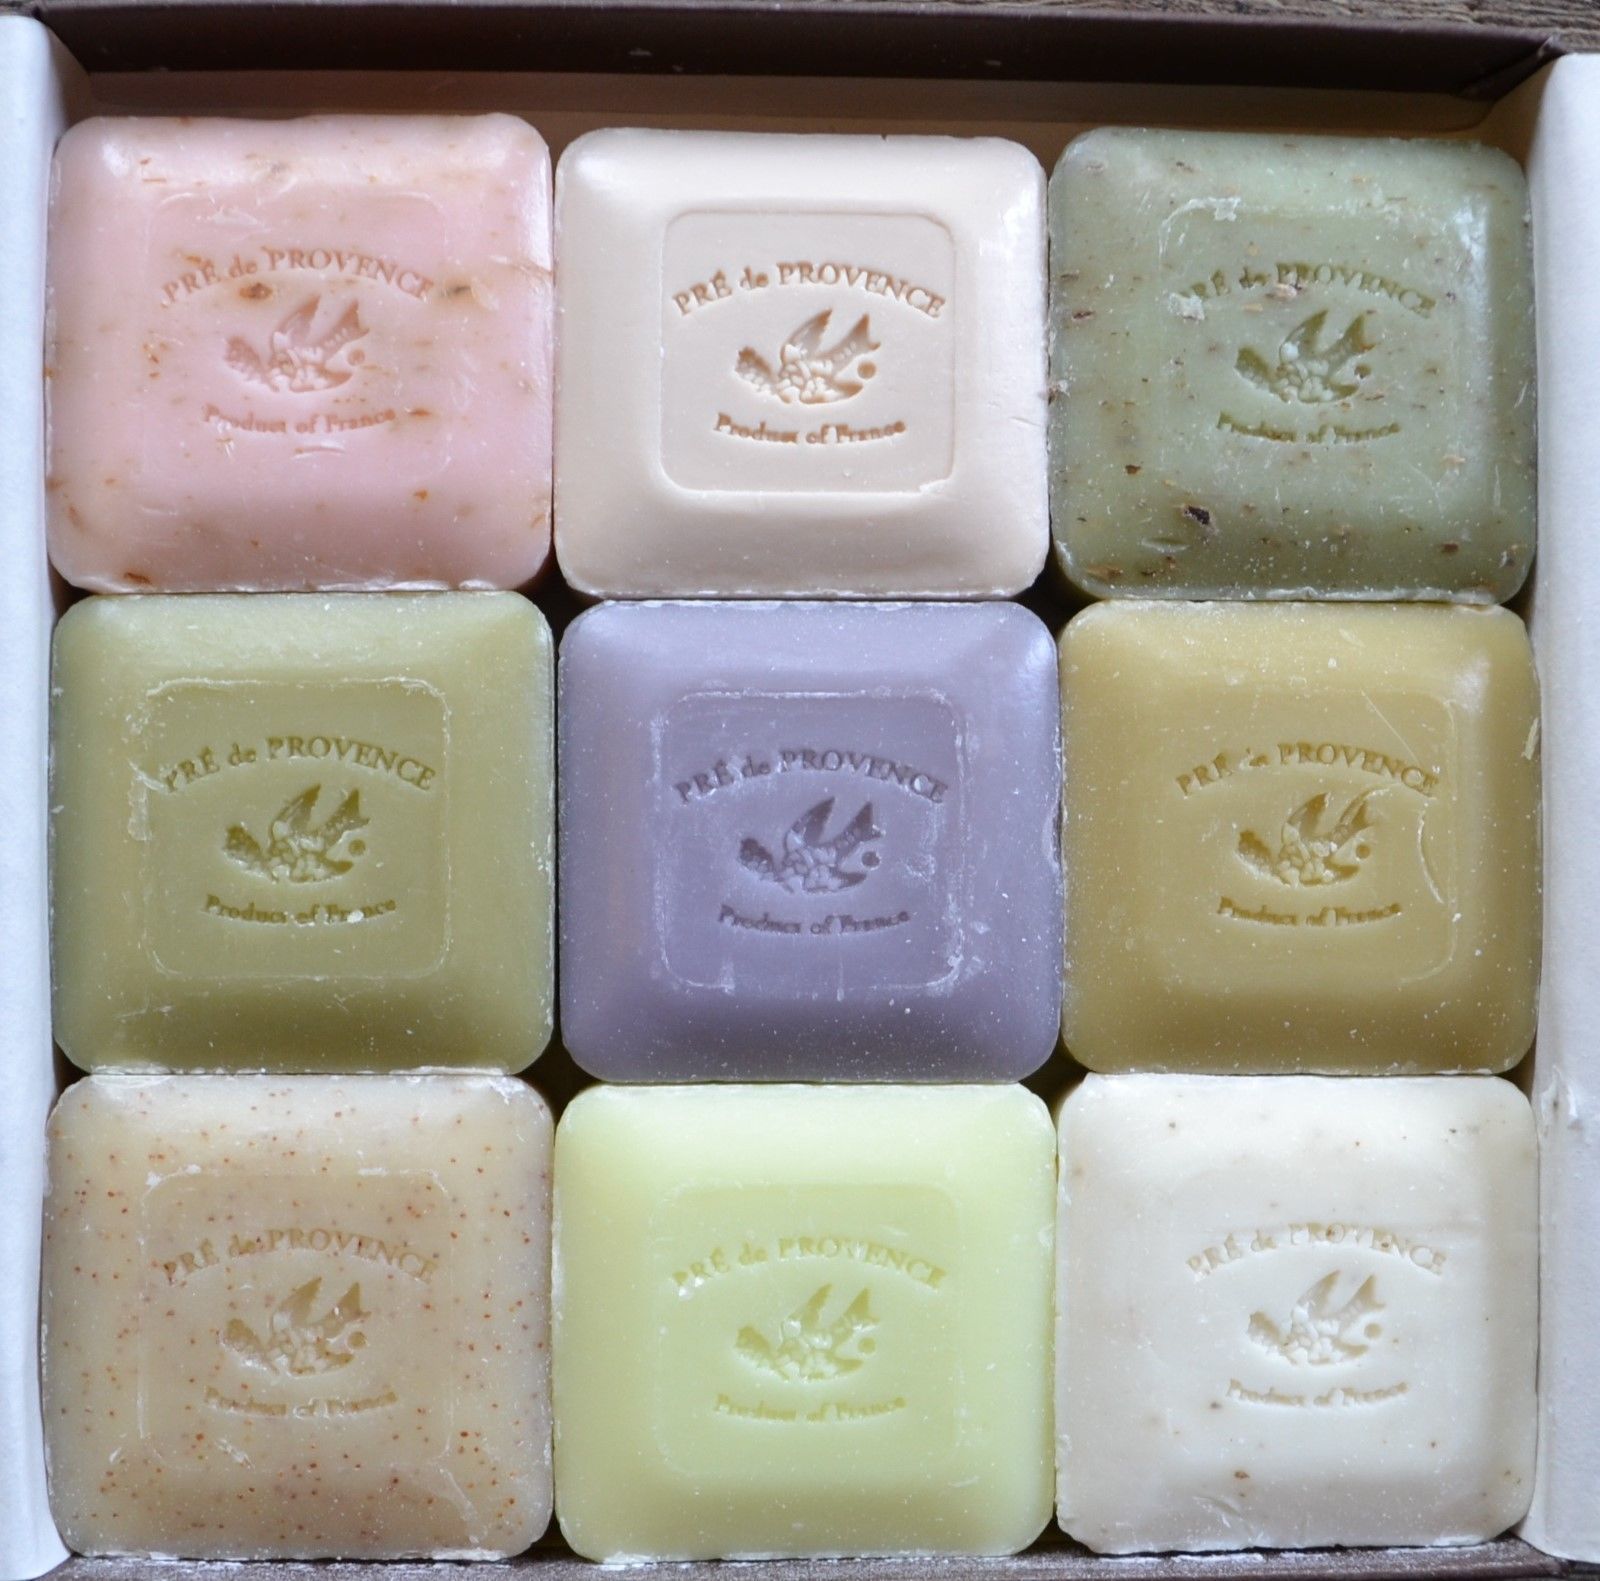 Pre de Provence shea butter enriched guest soaps in box, 9 ct, 25g